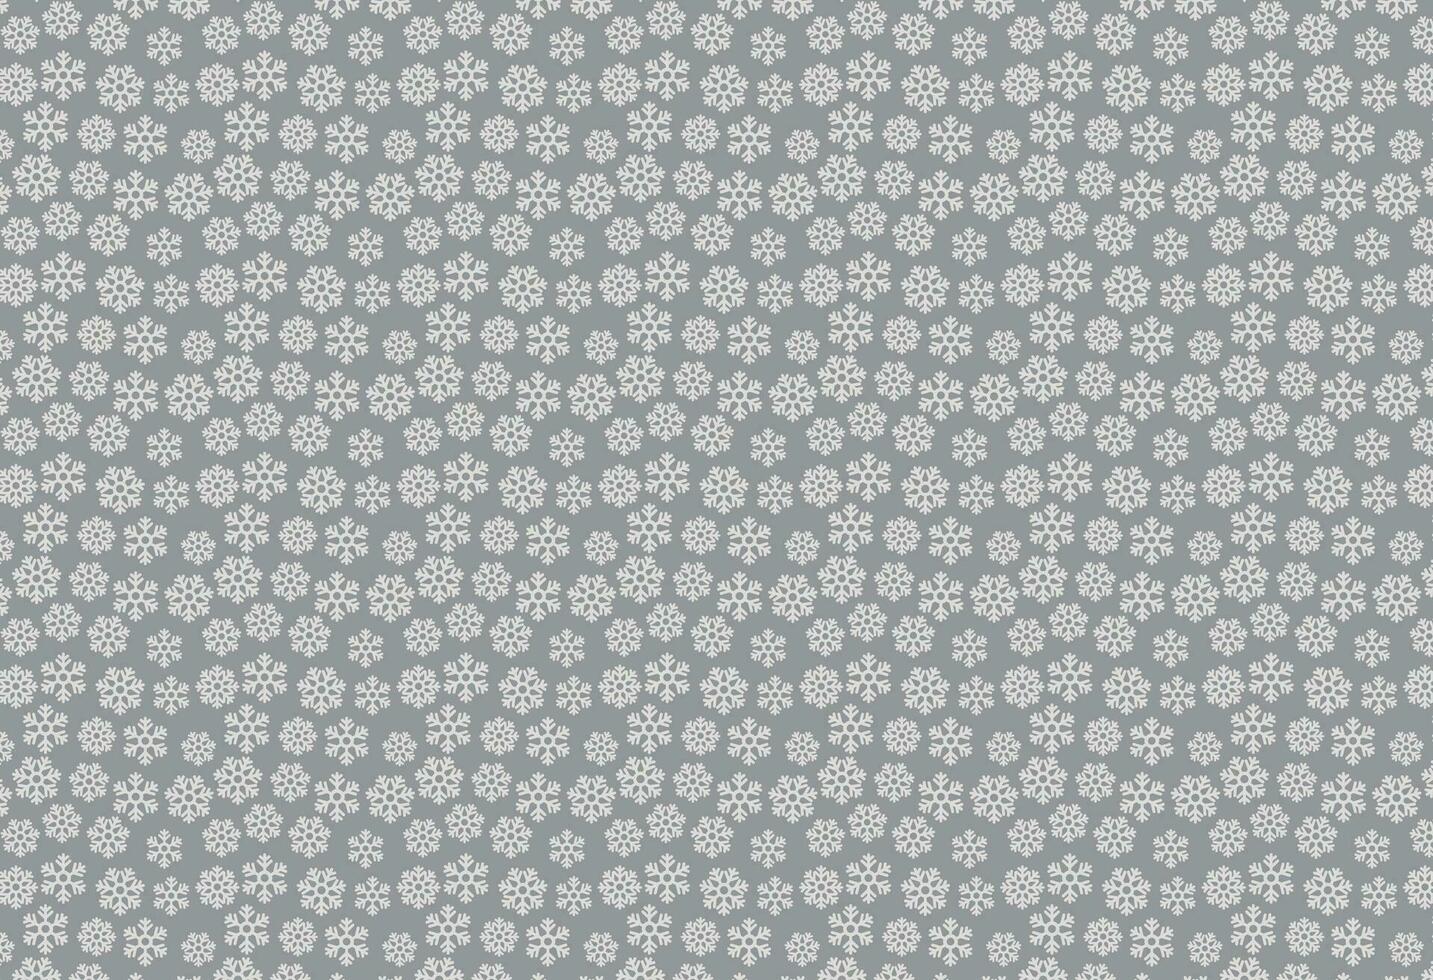 Elegant Gray Snowflake Pattern for Fabrics, Home Decor, and Web Art vector